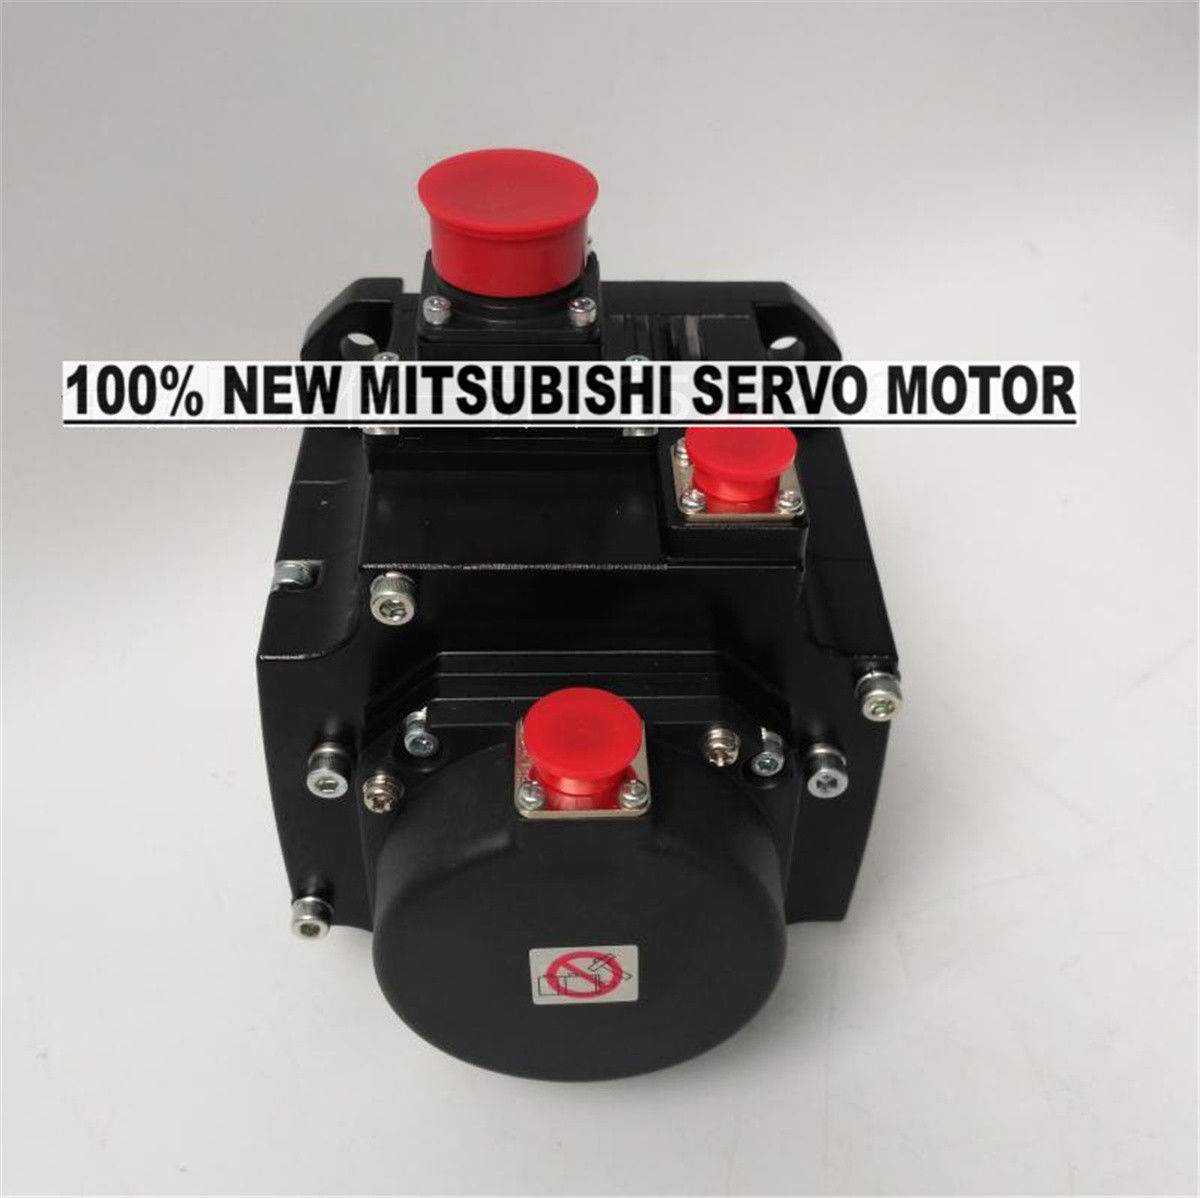 NEW Mitsubishi Servo Motor HG-SR52BJ in box HGSR52BJ - zum Schließen ins Bild klicken